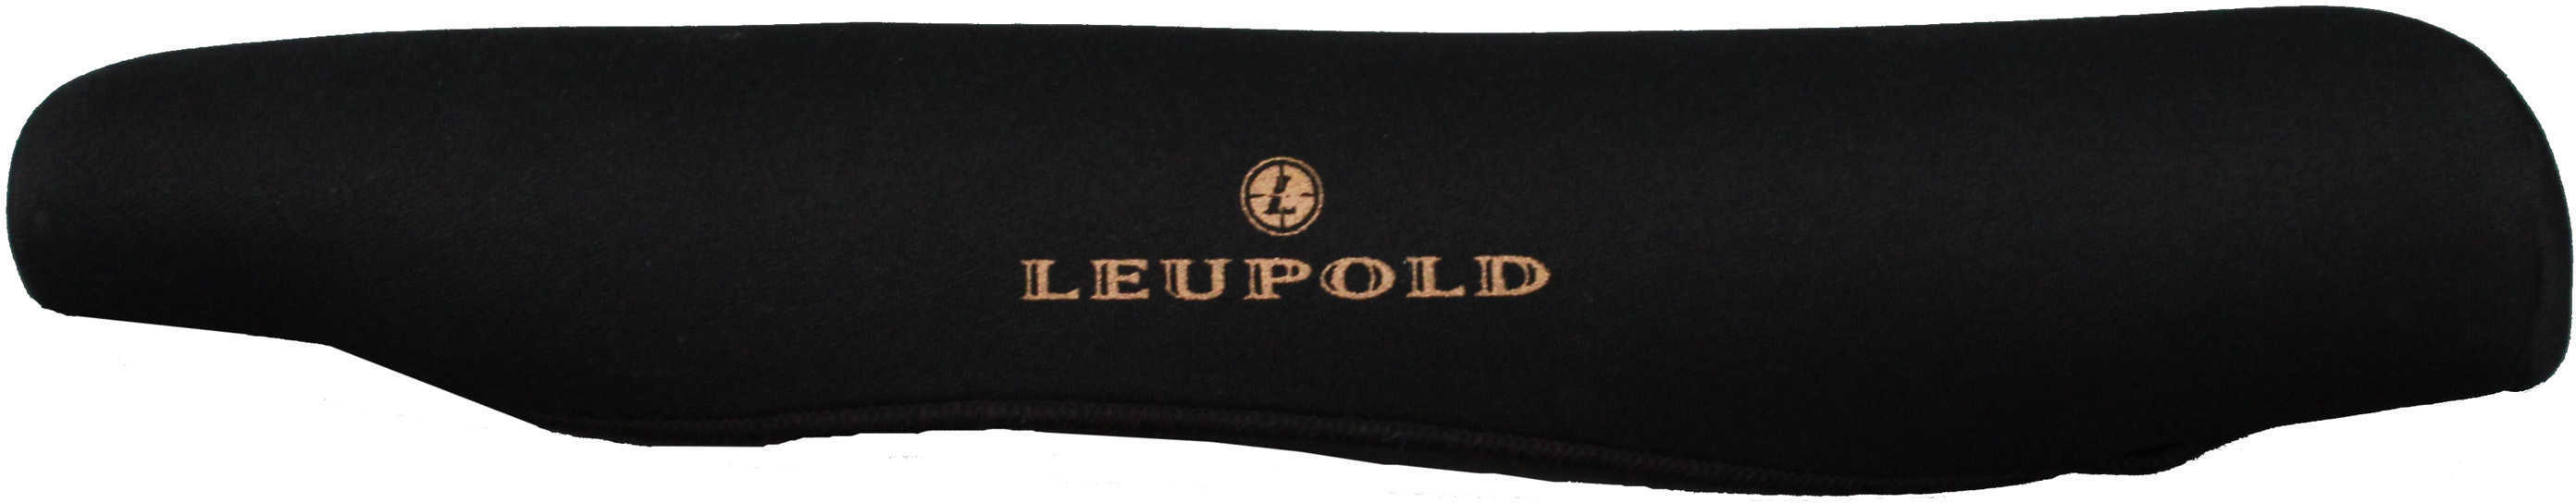 Leupold Neoprene Scope Cover - 2X-Large 15.5? x 60mm